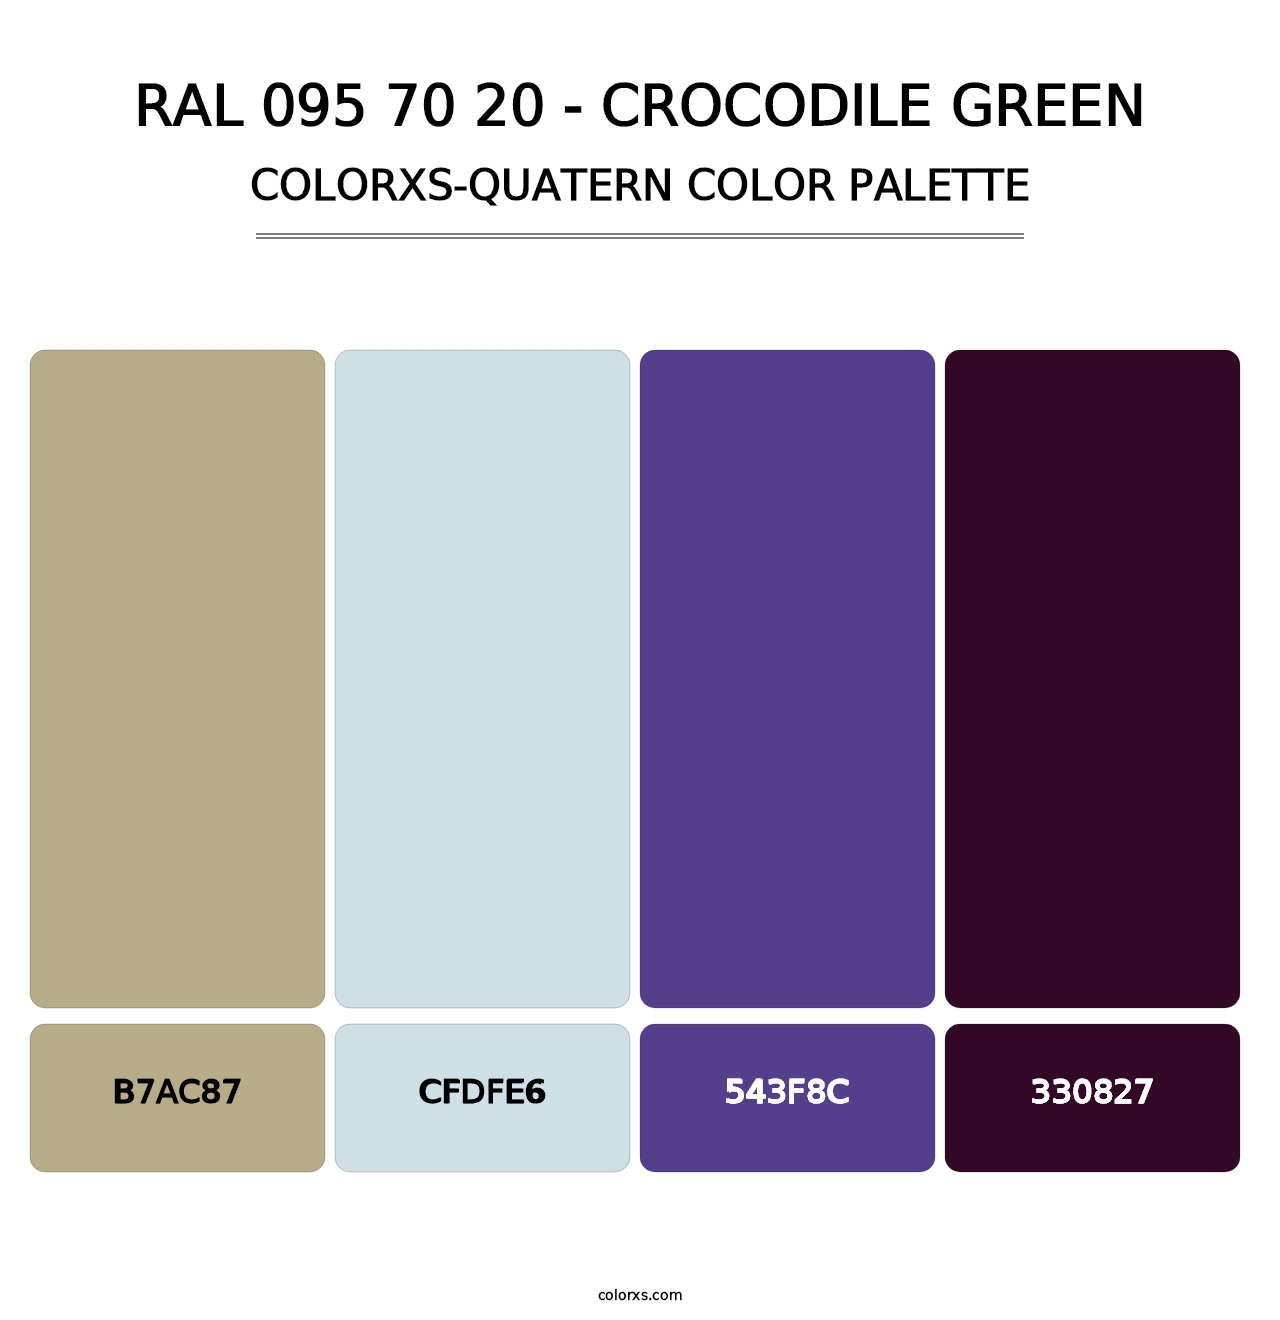 RAL 095 70 20 - Crocodile Green - Colorxs Quatern Palette